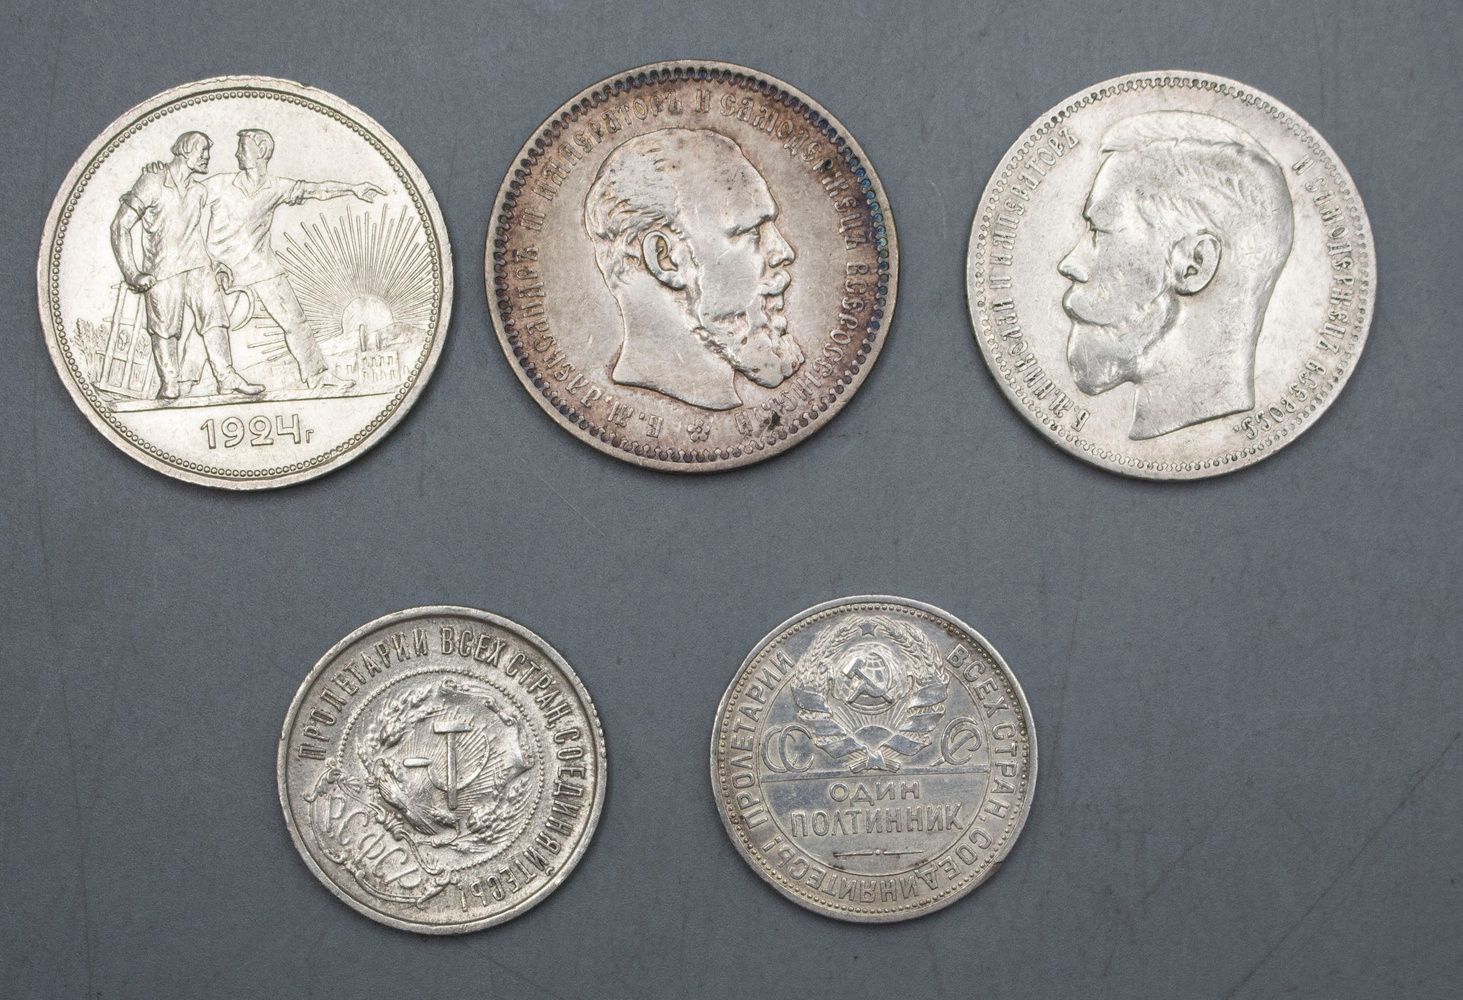 Sammlung Russische Münzen / A collection of Russian coins 包括:
* 1卢布 1893,
* 1卢布 &hellip;